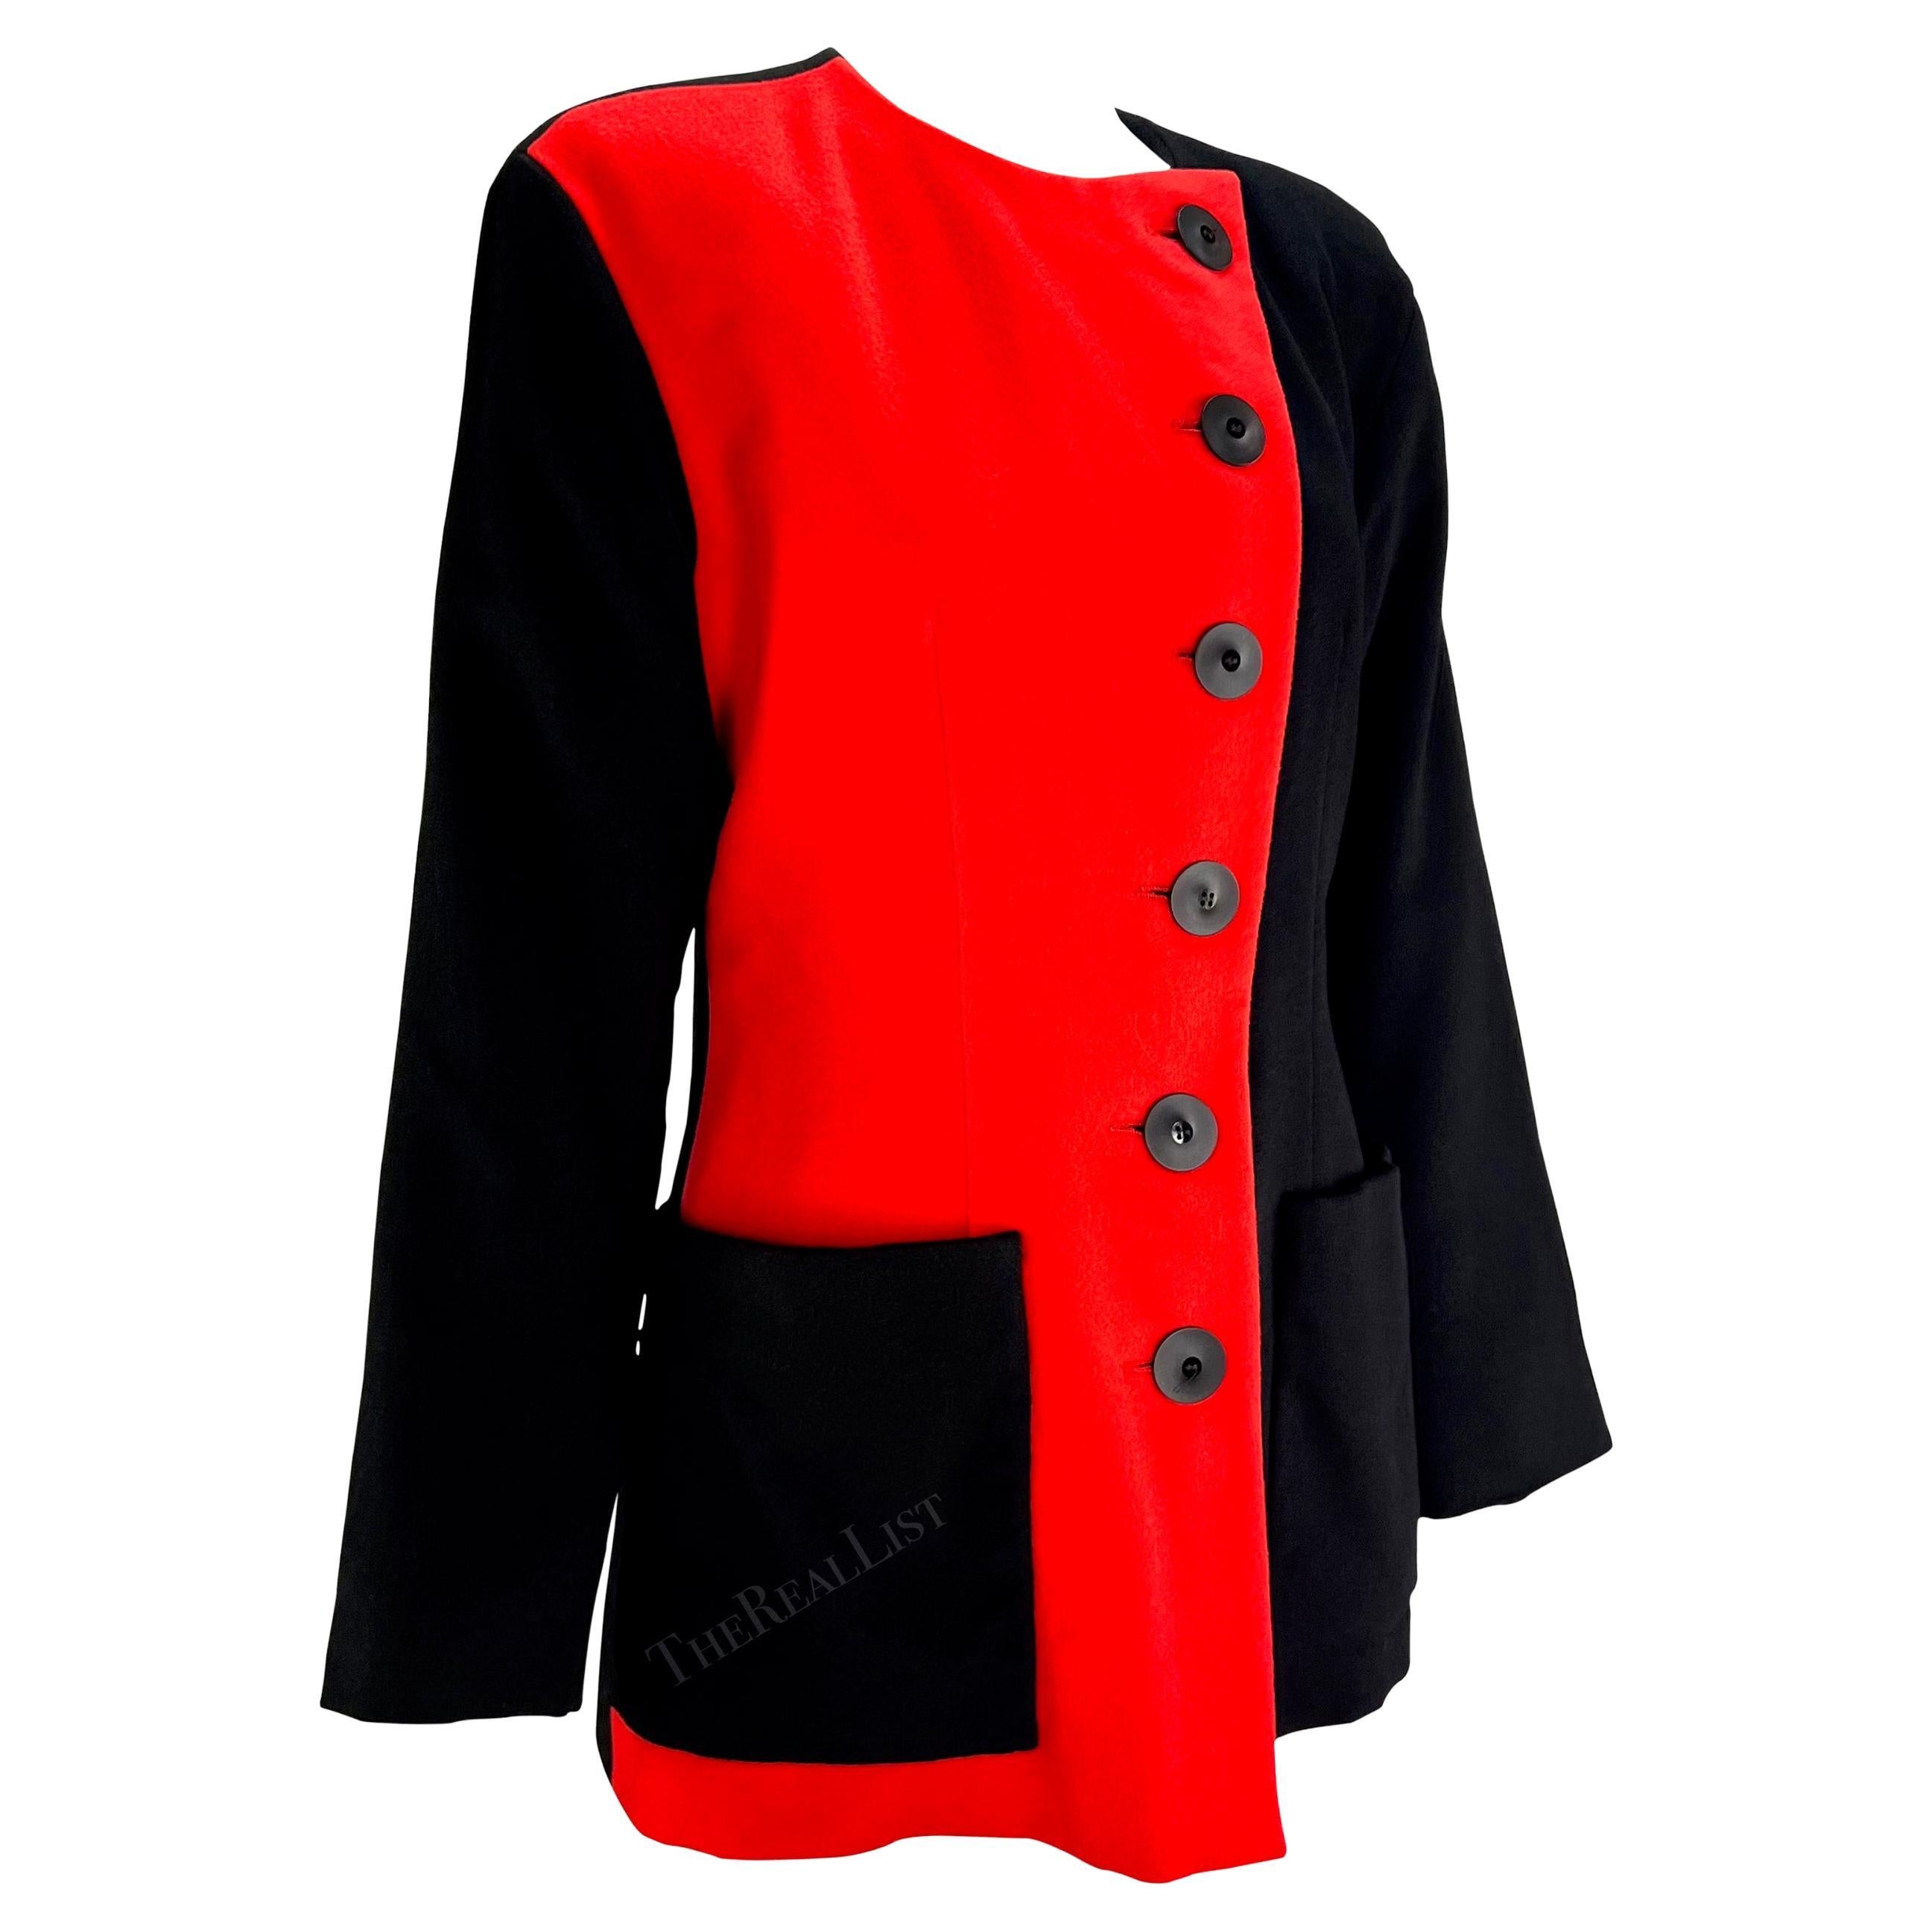 S/S 1992 Yves Saint Laurent Red Color-Block Black Mini Coat Dress Blazer Jacket For Sale 4